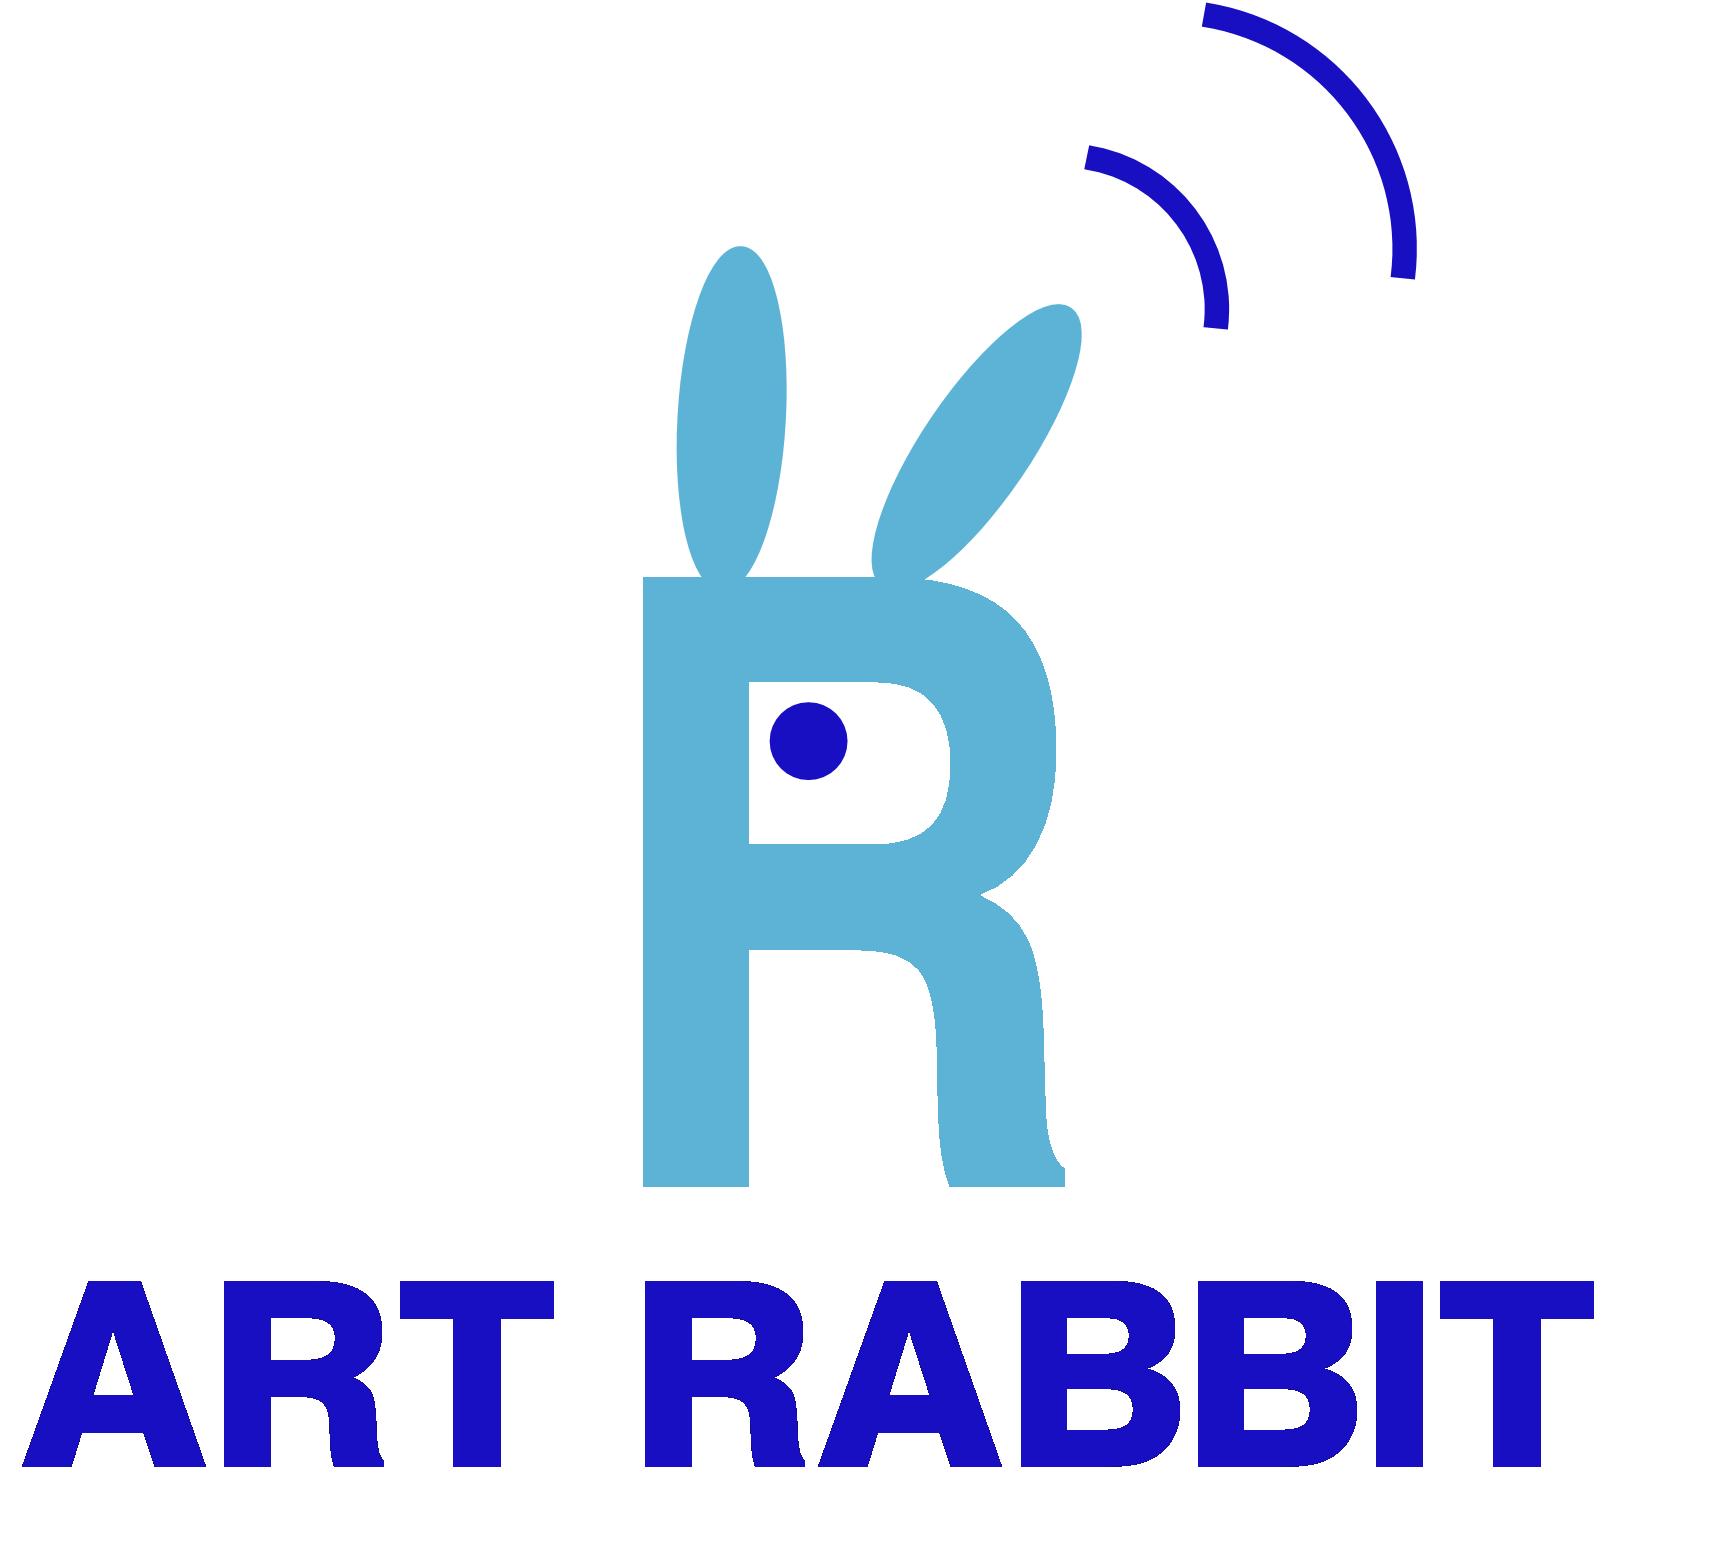 USE THIS art rabbit logo jpeg